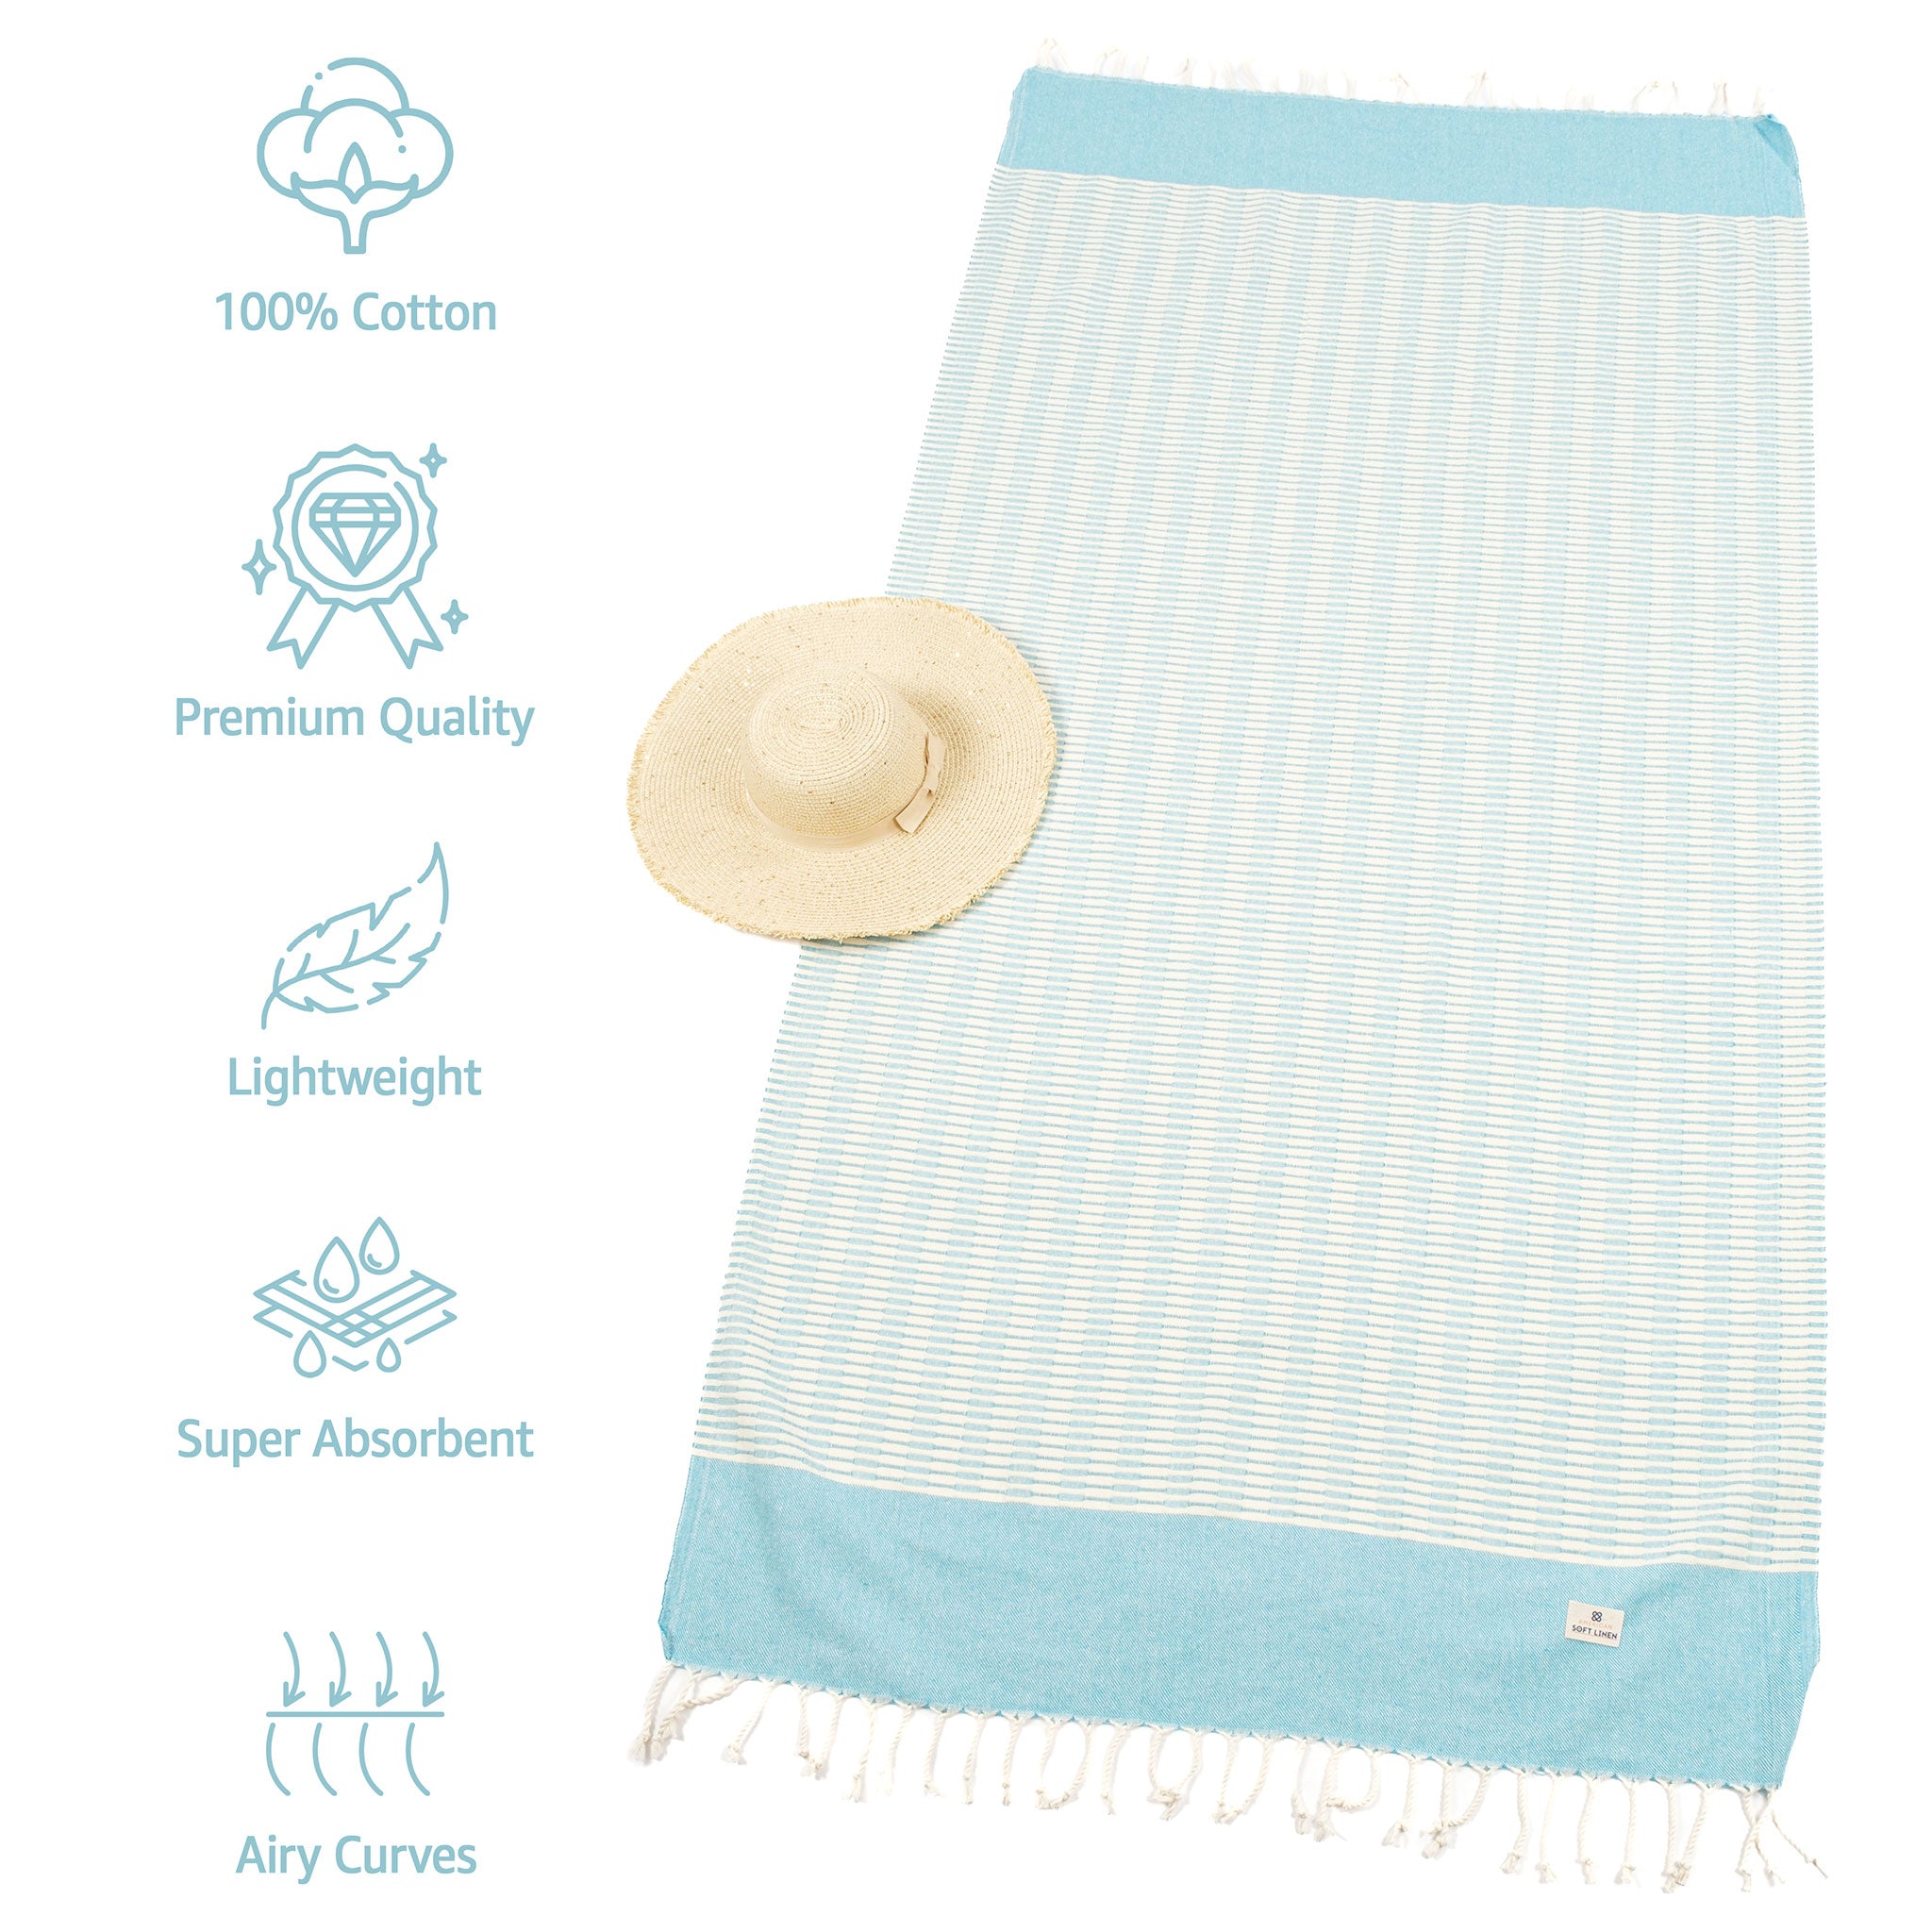 American Soft Linen - 100% Cotton Turkish Peshtemal Towels - 44 Set Case Pack - Turquoise - 3